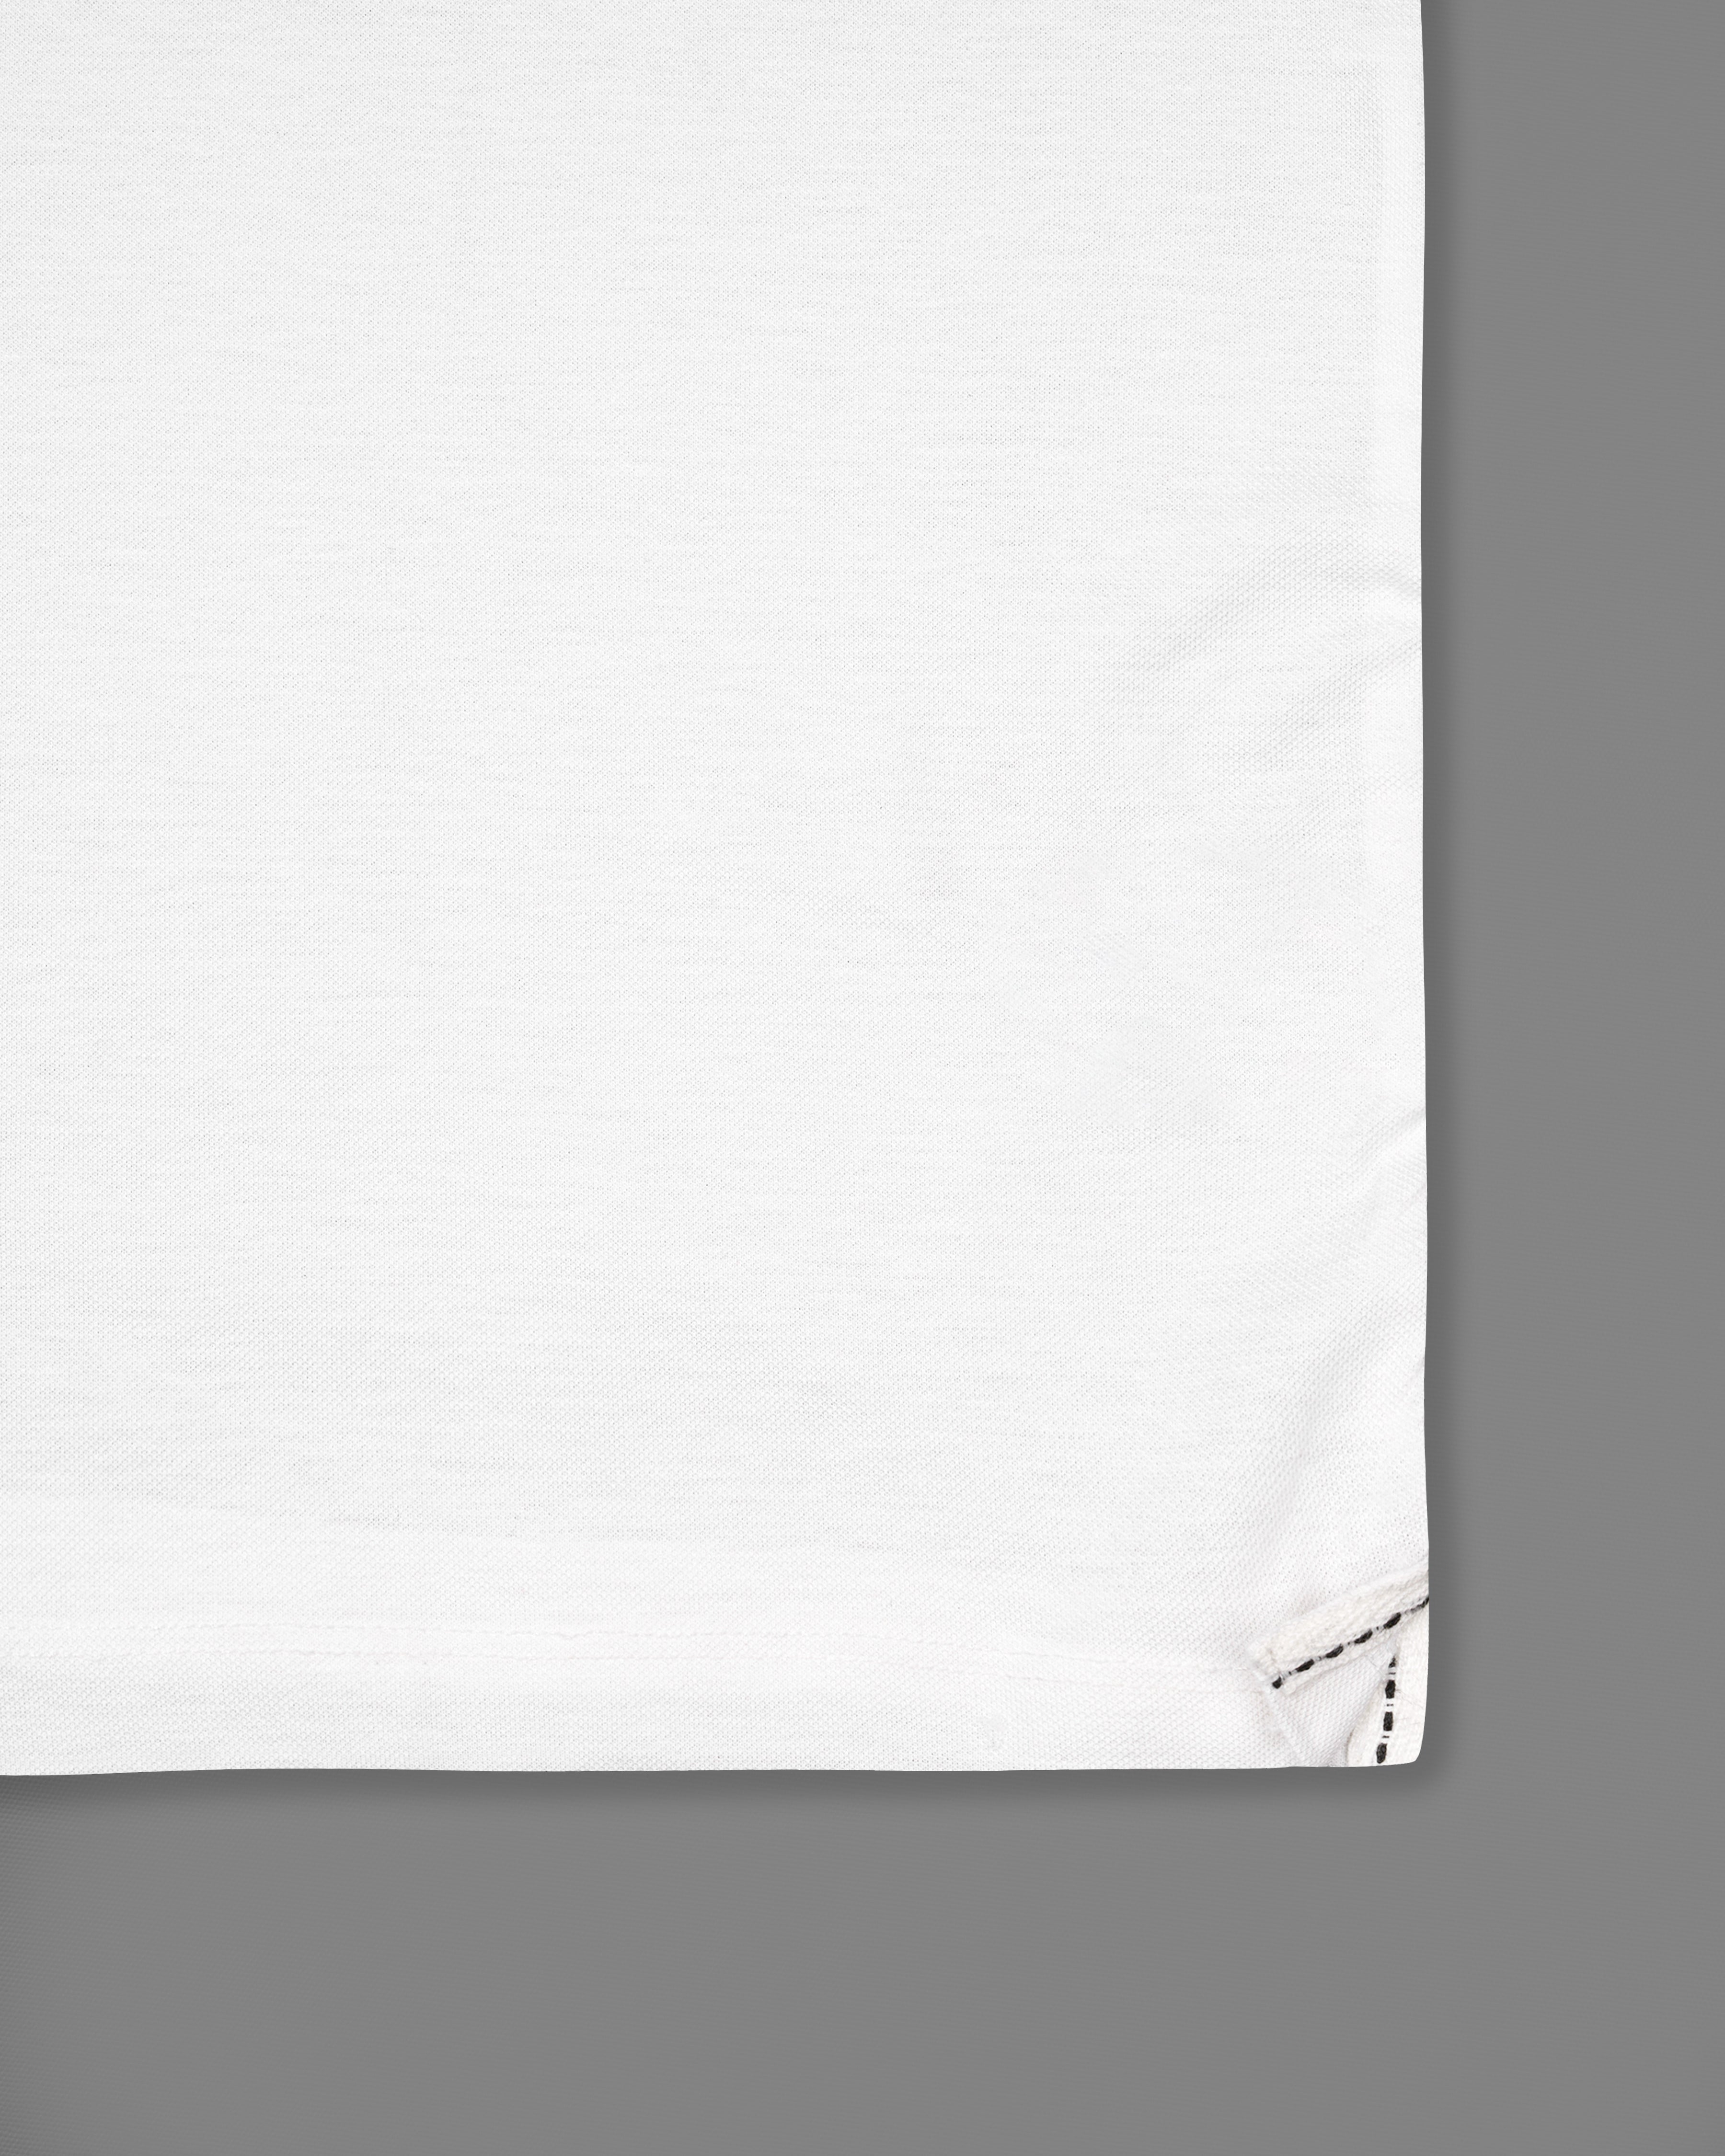 Bright White with Striped Printed Organic Cotton Pique Polo TS828-S, TS828-M, TS828-L, TS828-XL, TS828-XXL